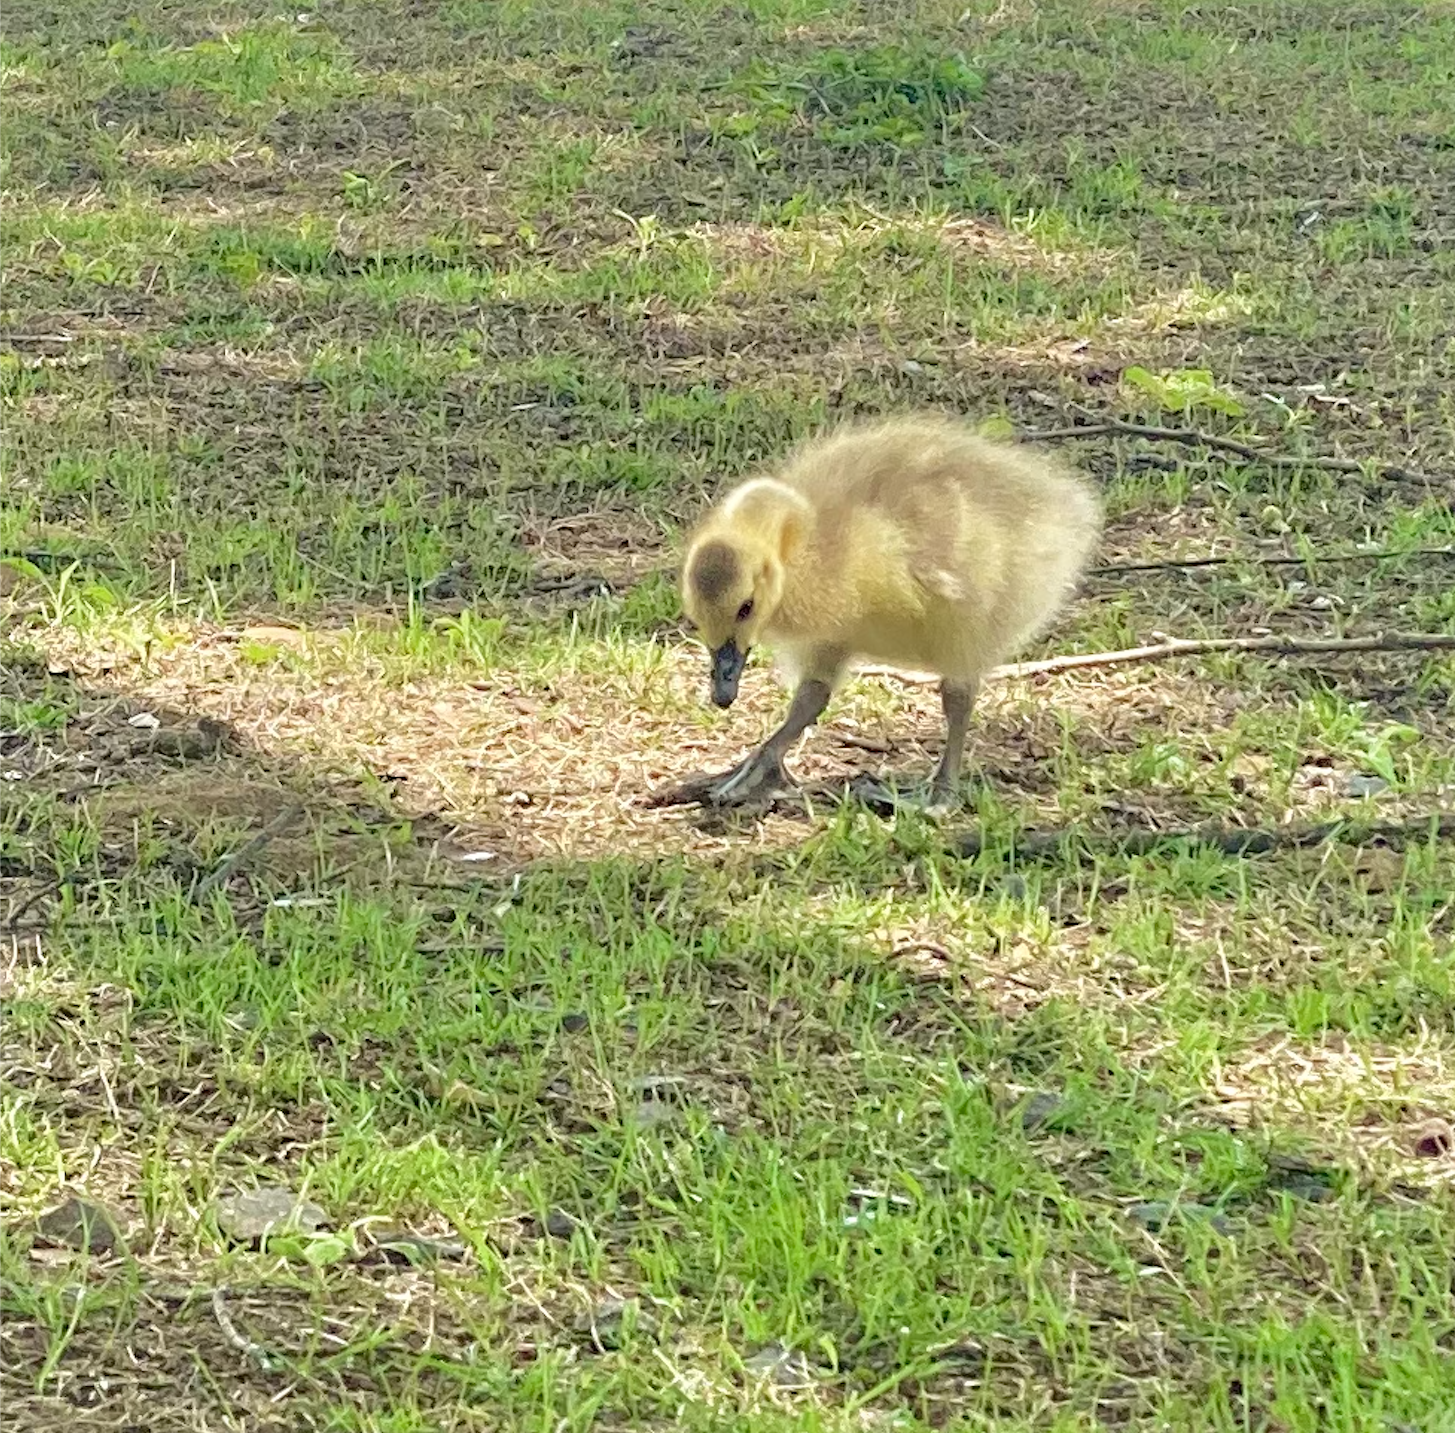 Little gosling wandering in the grass.